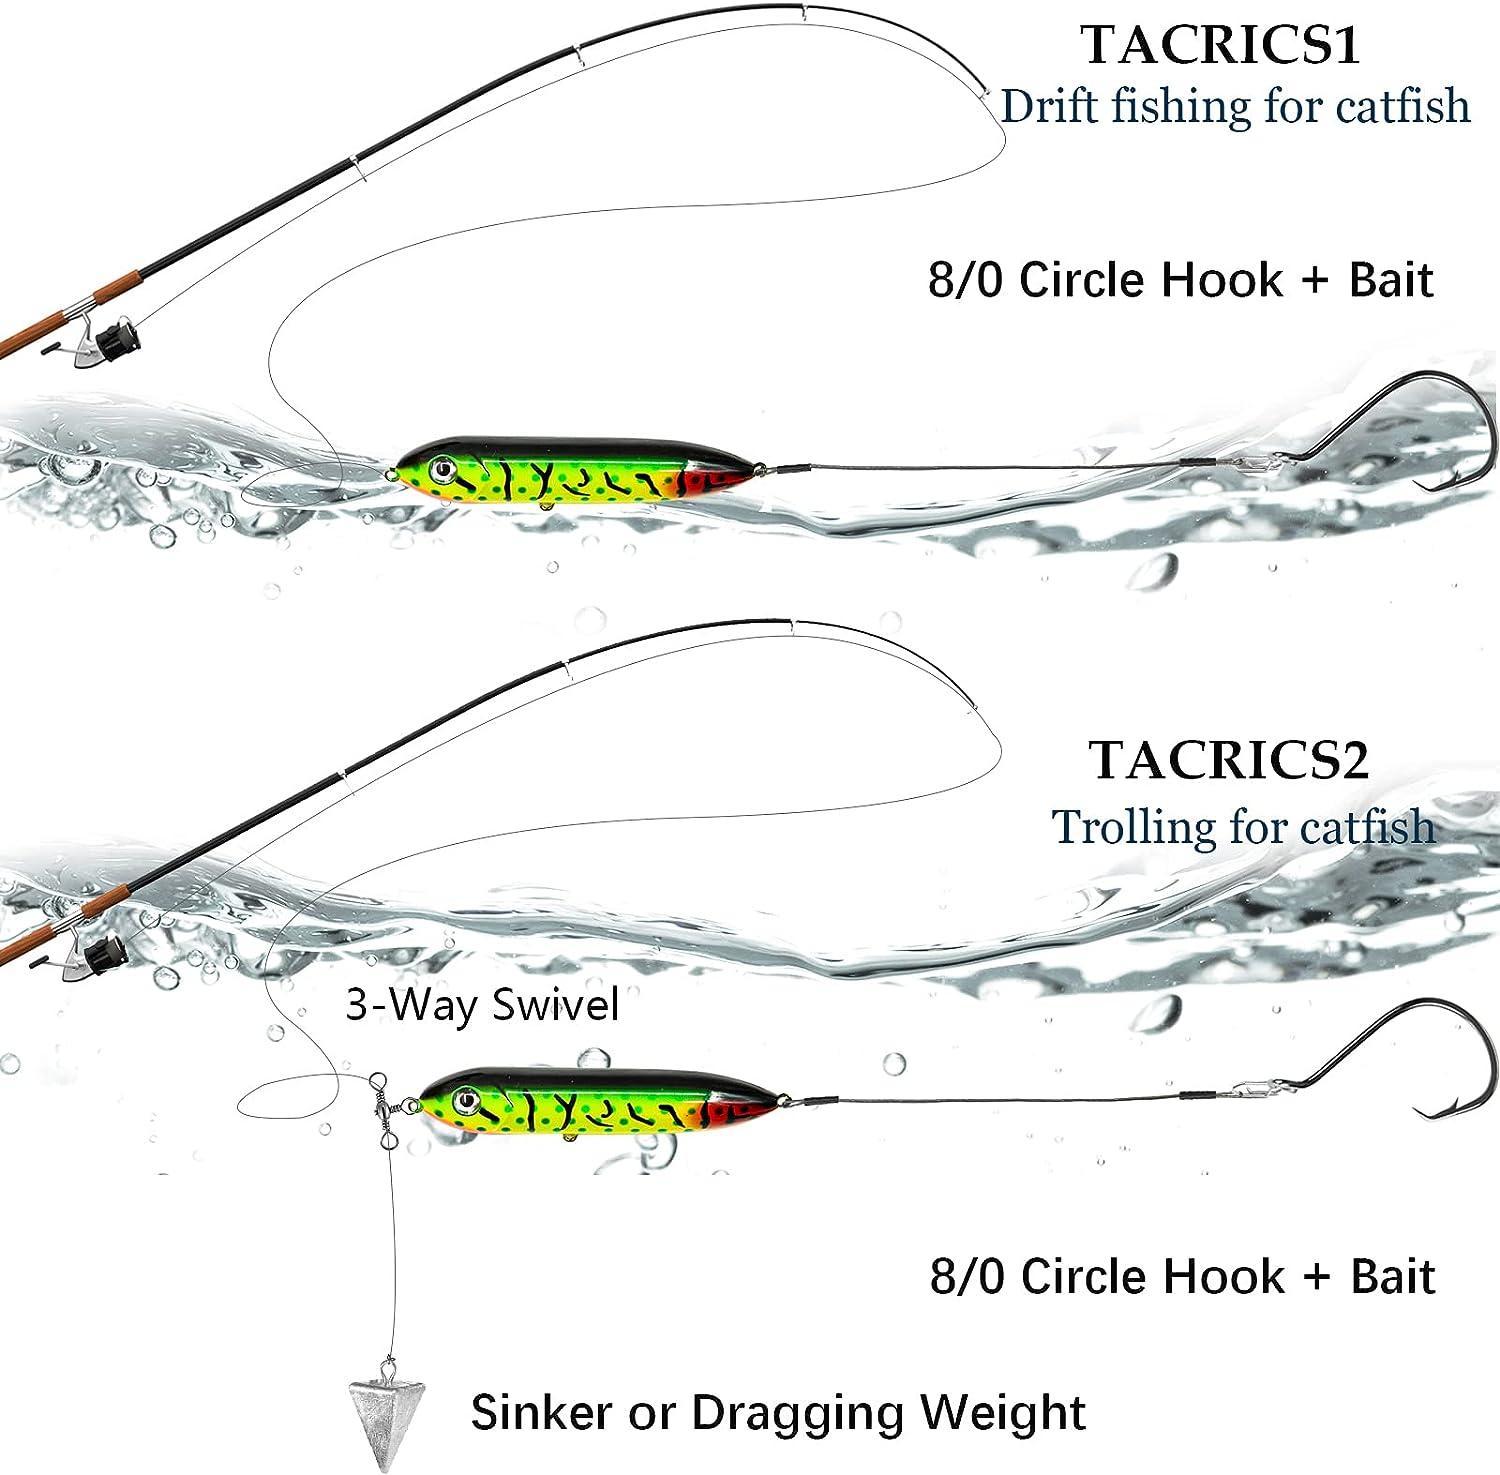 Gourami Catfish Float Rigs Demon Dragon Catfishing Lure Rattling Santee rig  Tackle Orange